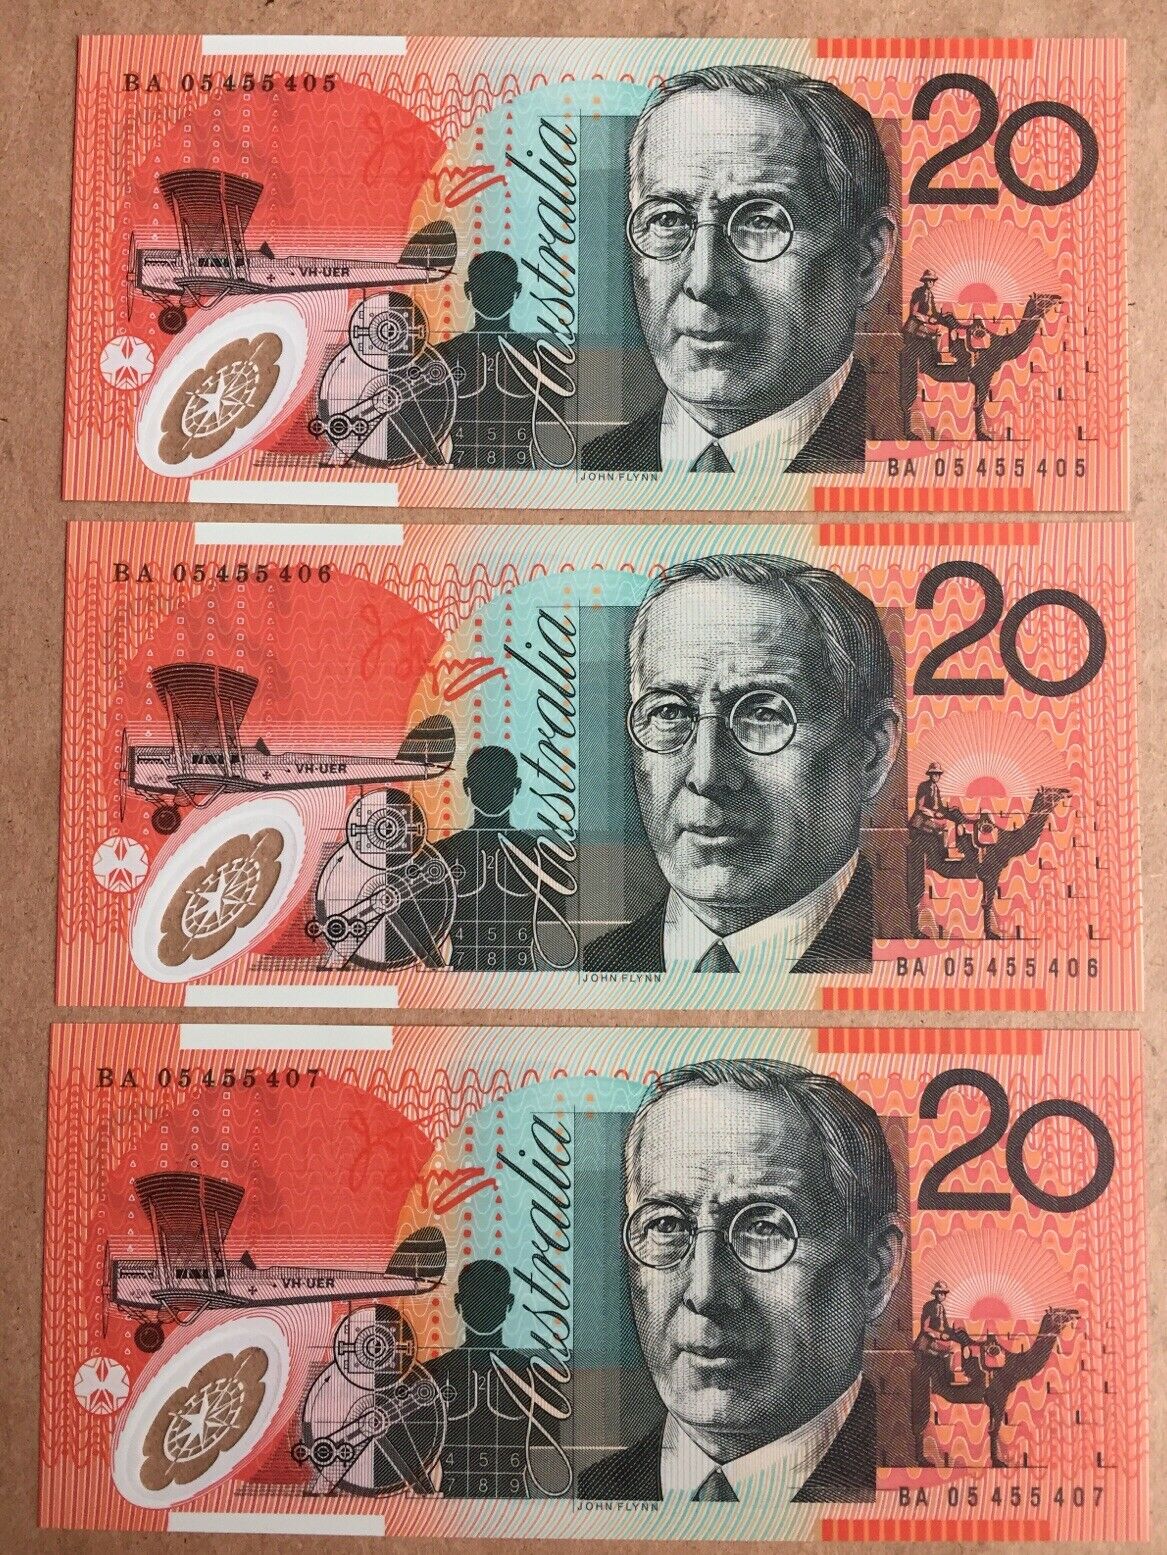 R420c 2005 $20 Macfarlane Henry Polymer Banknotes Consecutive Run of 3 Unc.